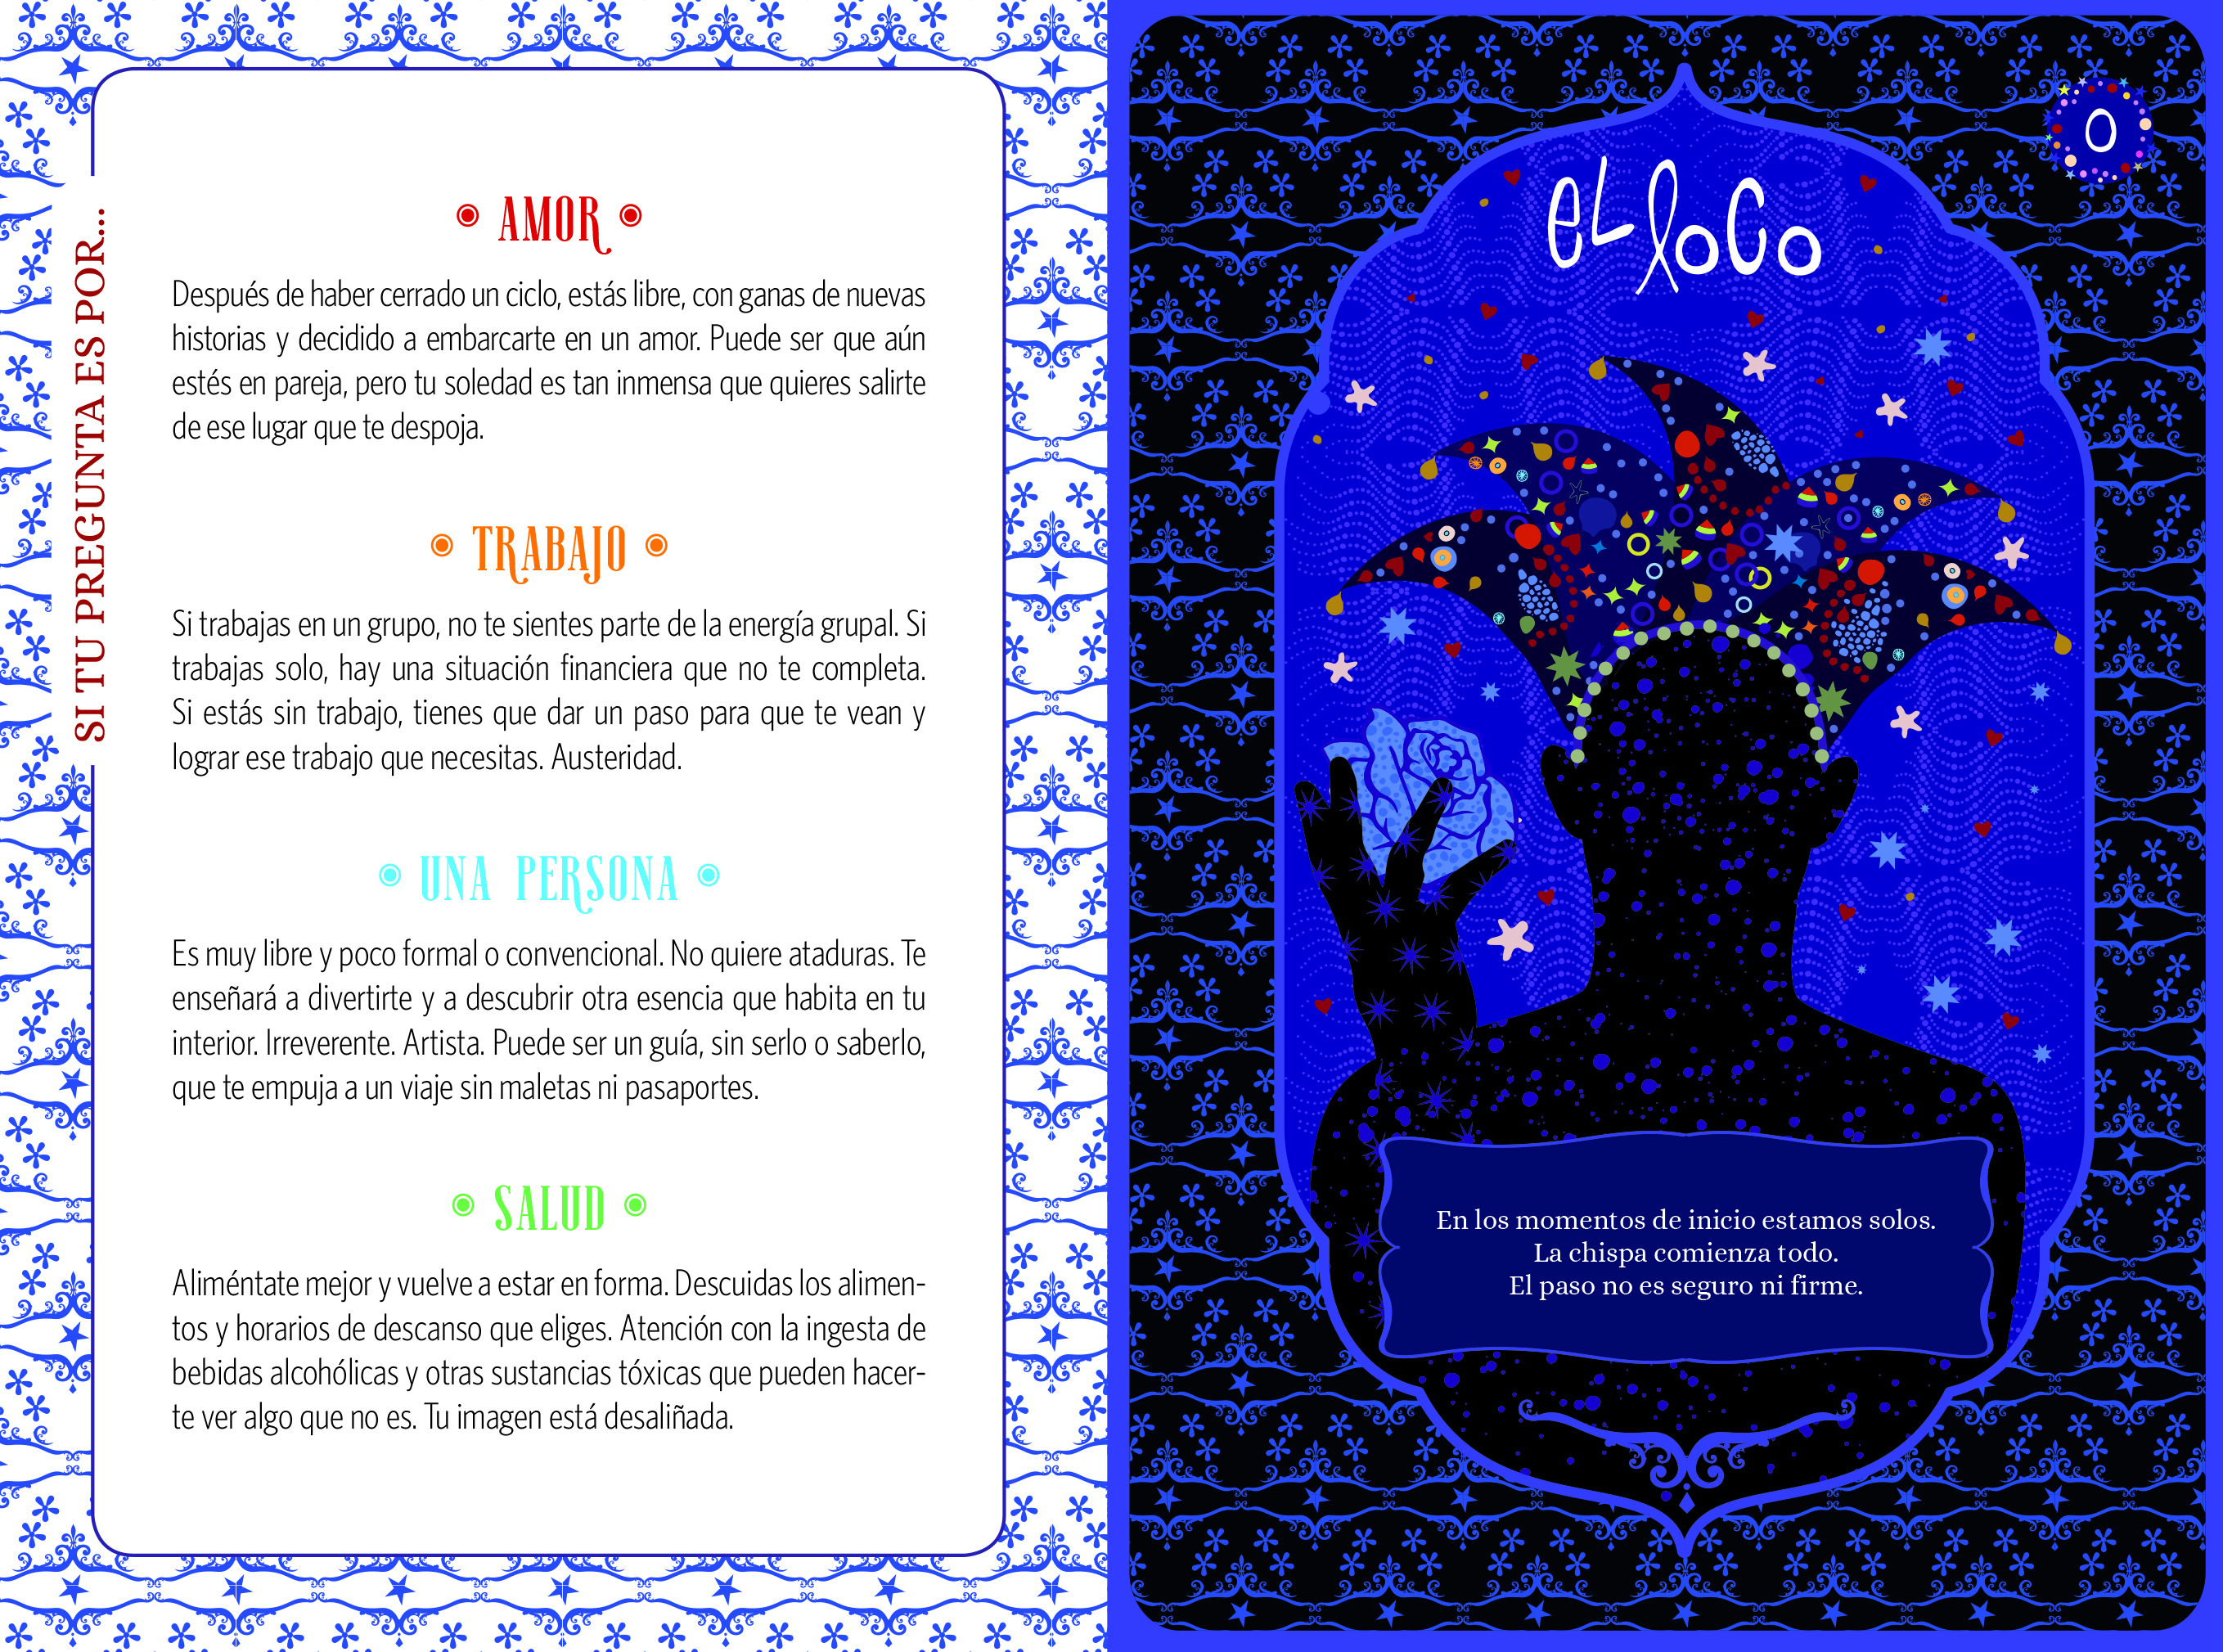 Lenguaje De Amor: Libro De Colorear Para Parejas (Paperback) 